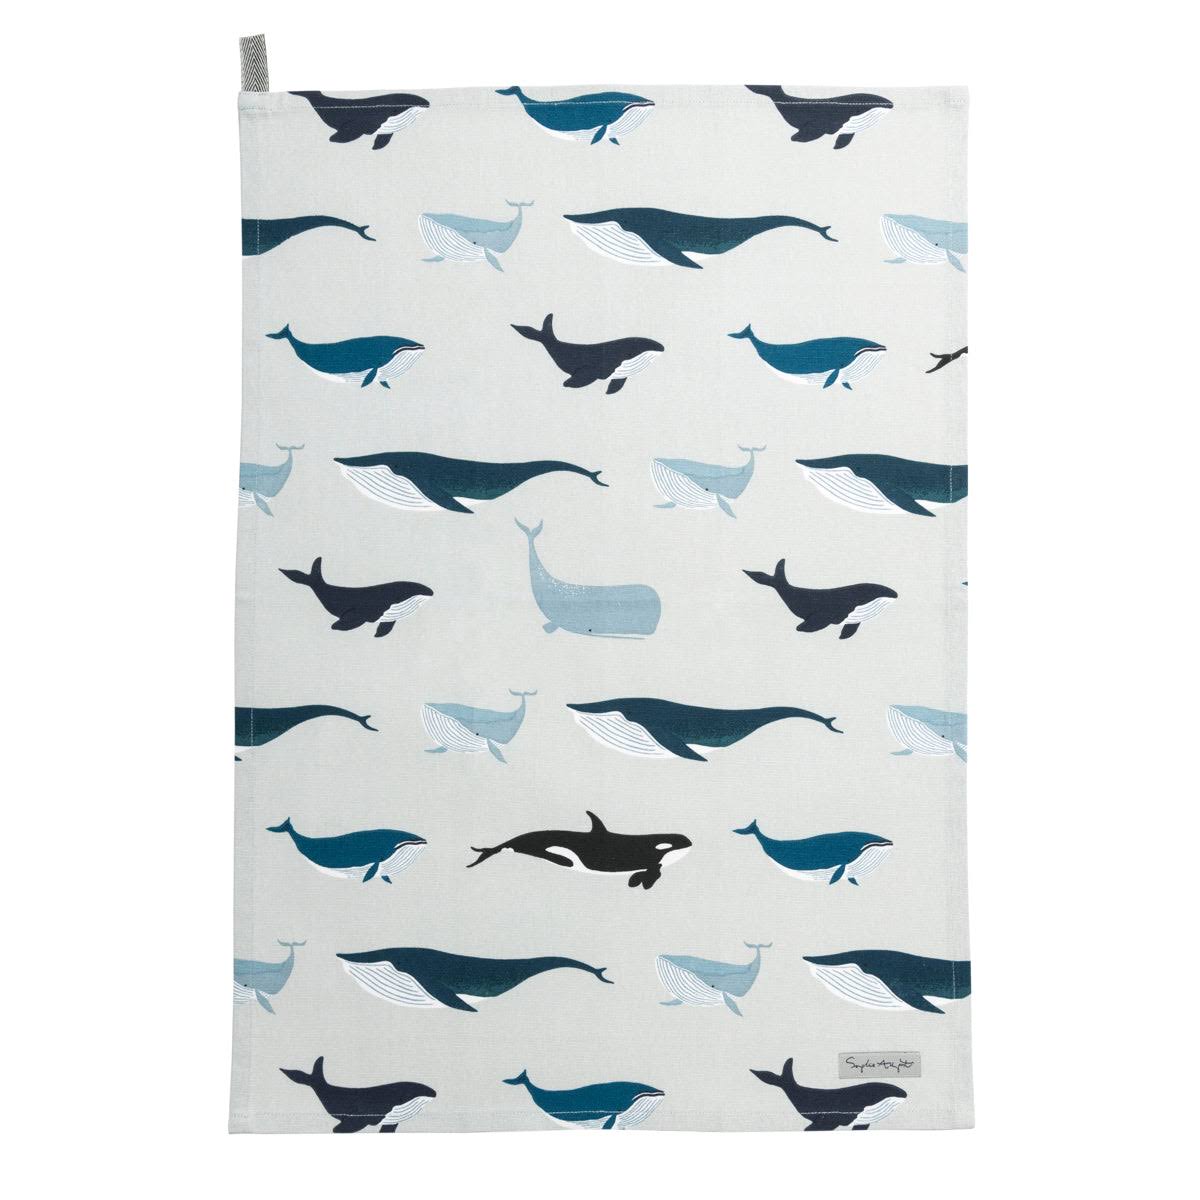 Whales Tea Towel by Sophie Allport